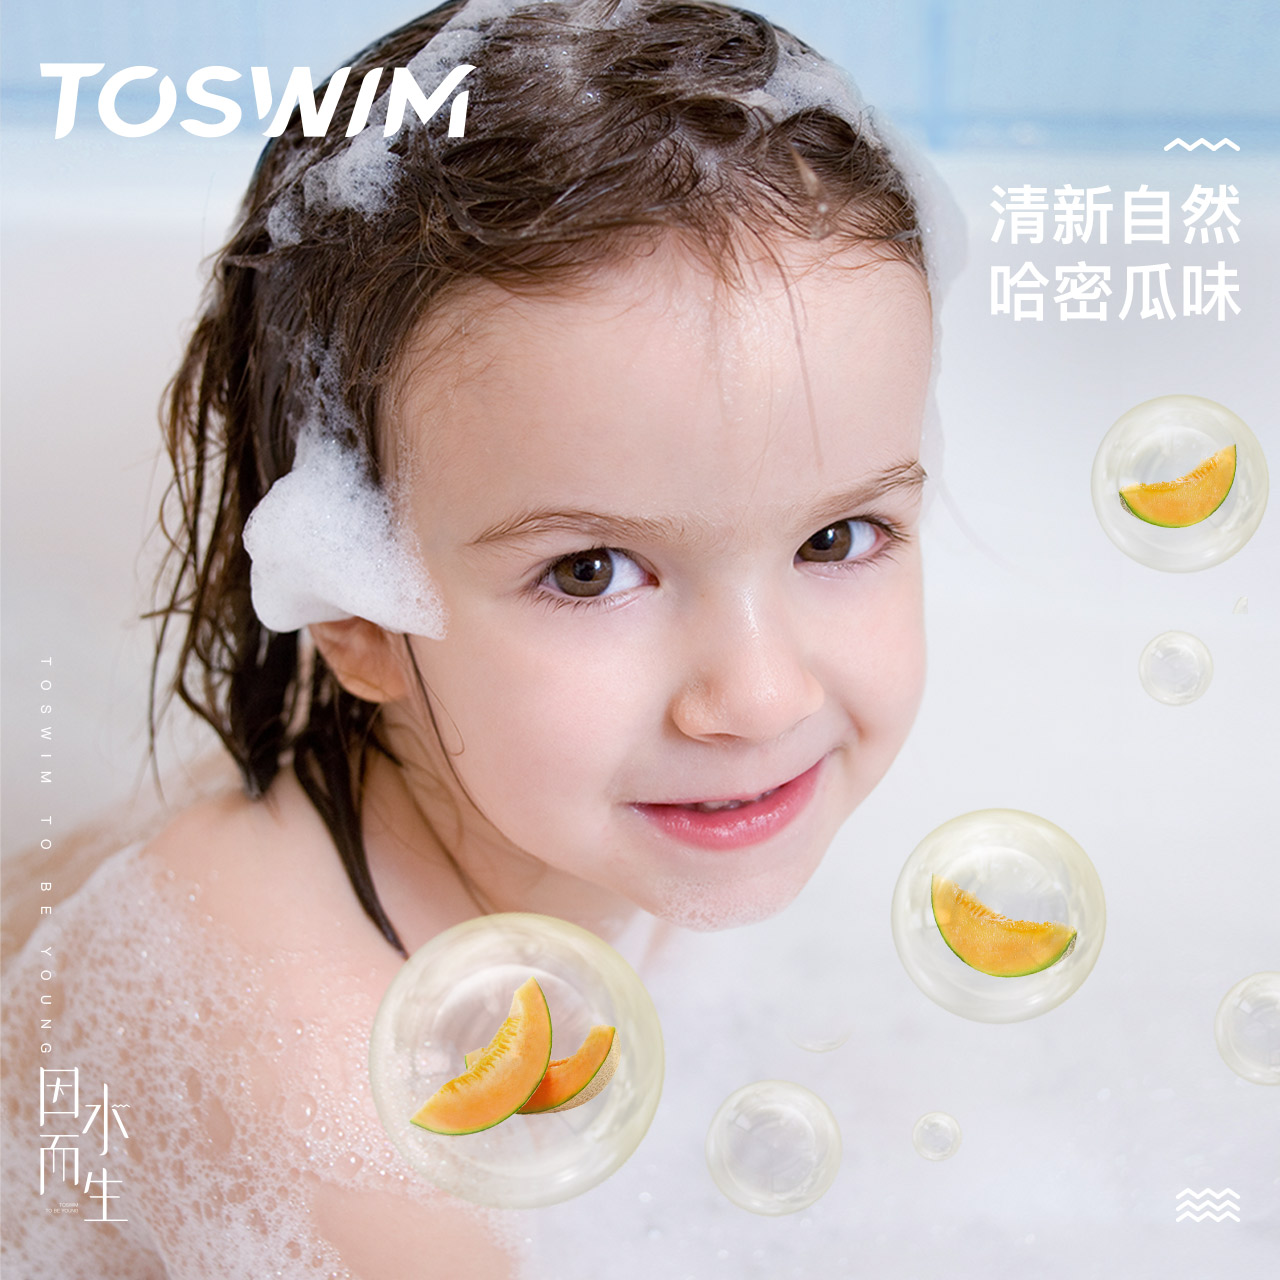 TOSWIM儿童游泳专用去氯沐浴露洗发水二合一洗护温和除氯浴液装备 - 图2